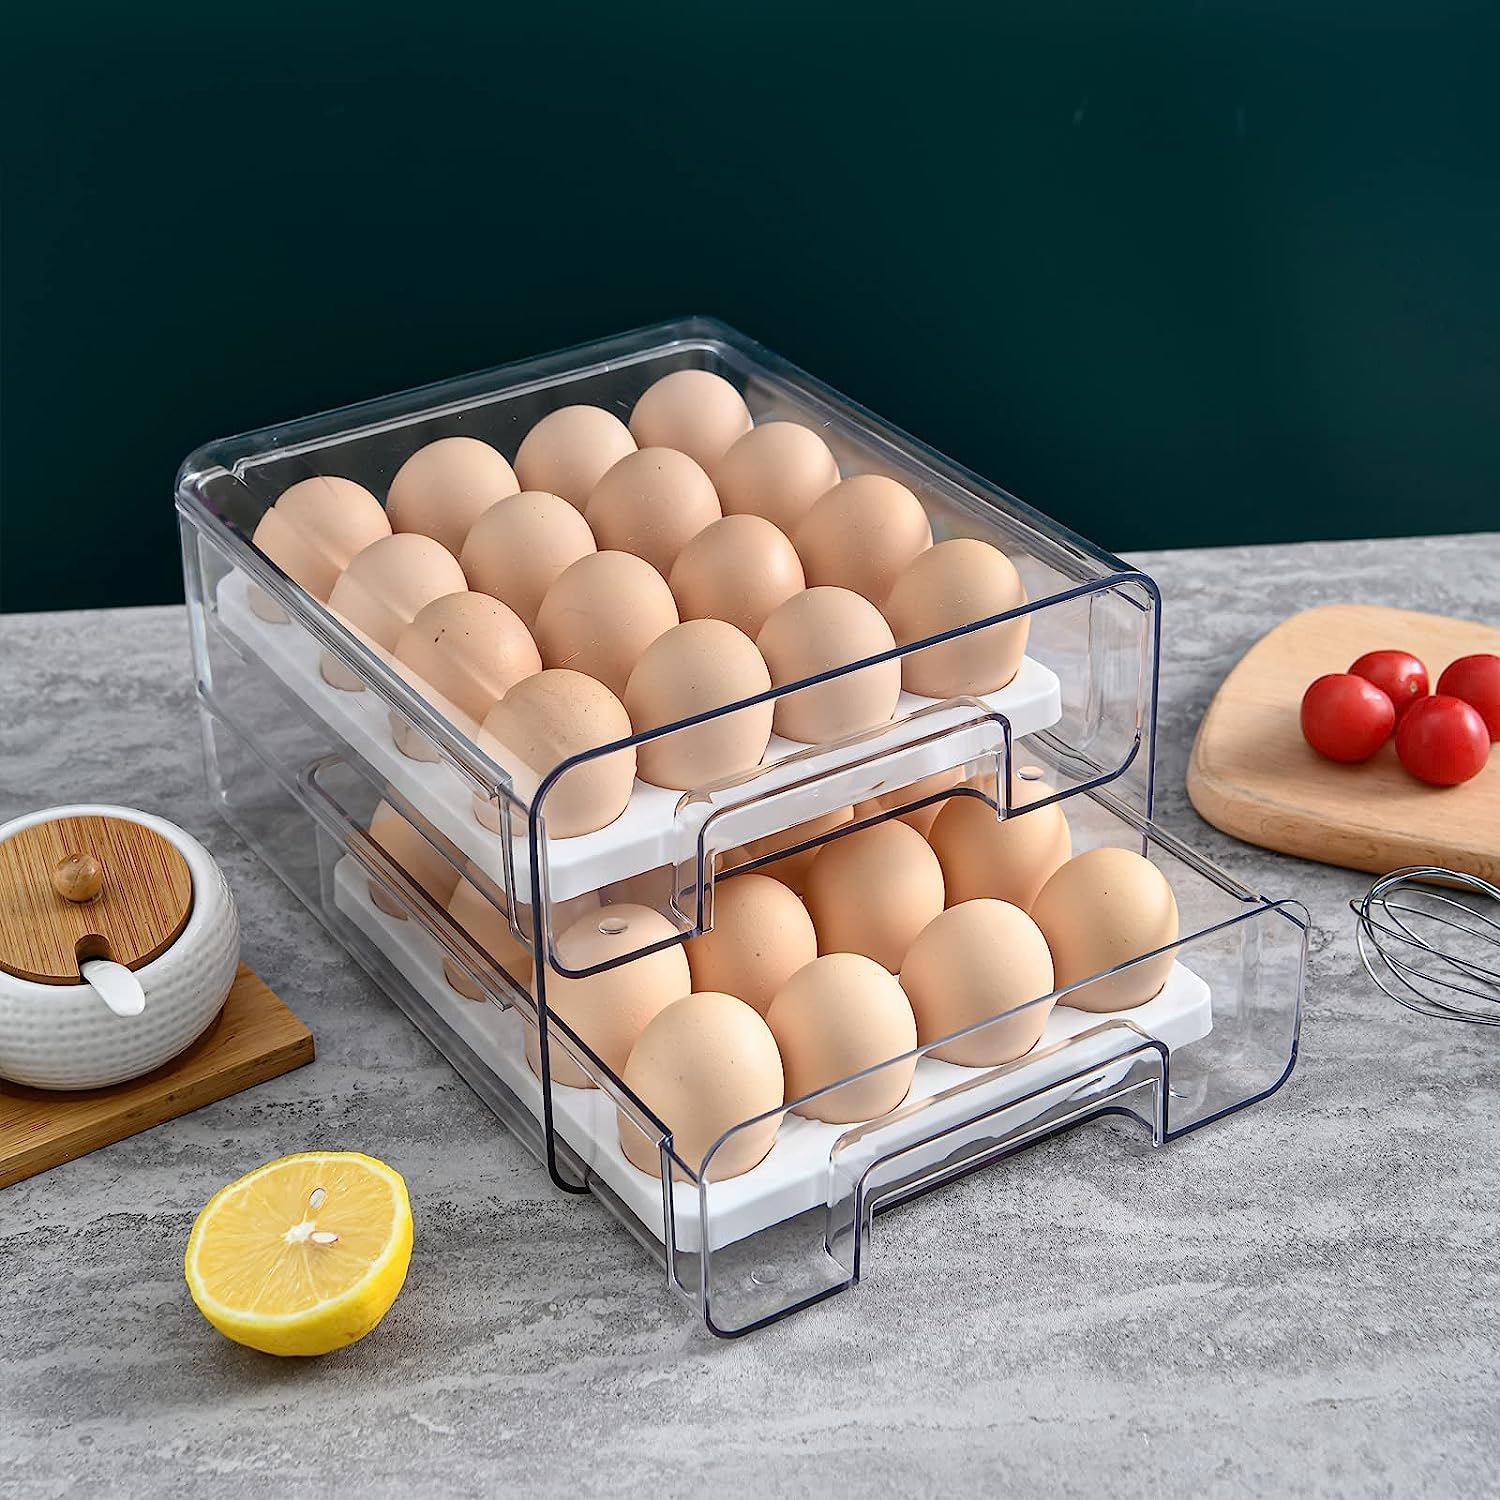 13 Best Egg Storage For 2023 1688523890 